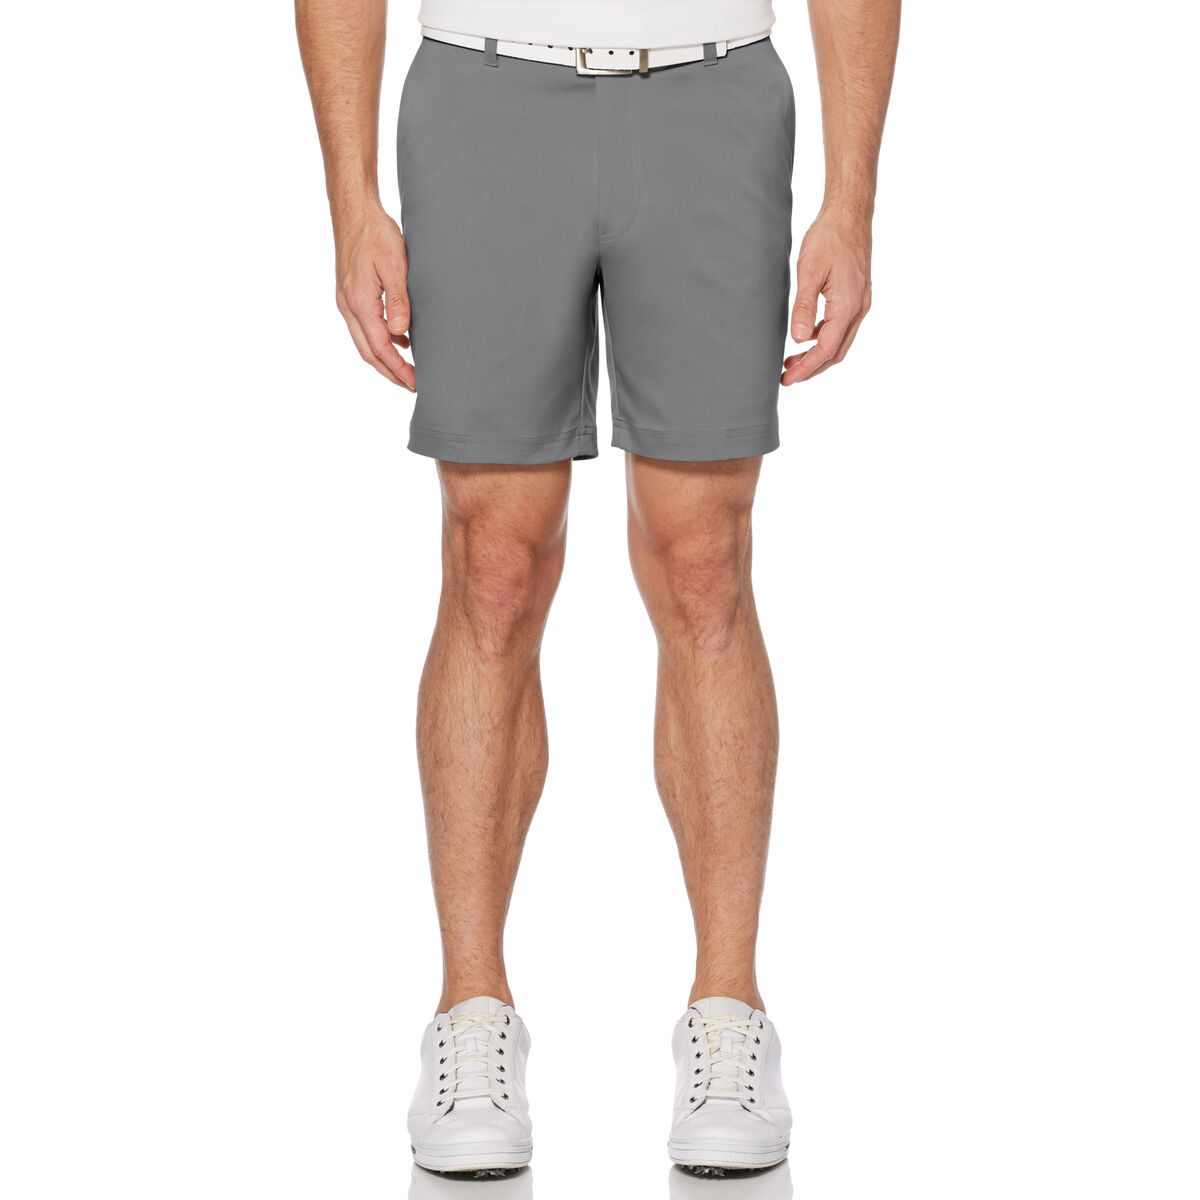 pro tour golf shorts 7 inch inseam